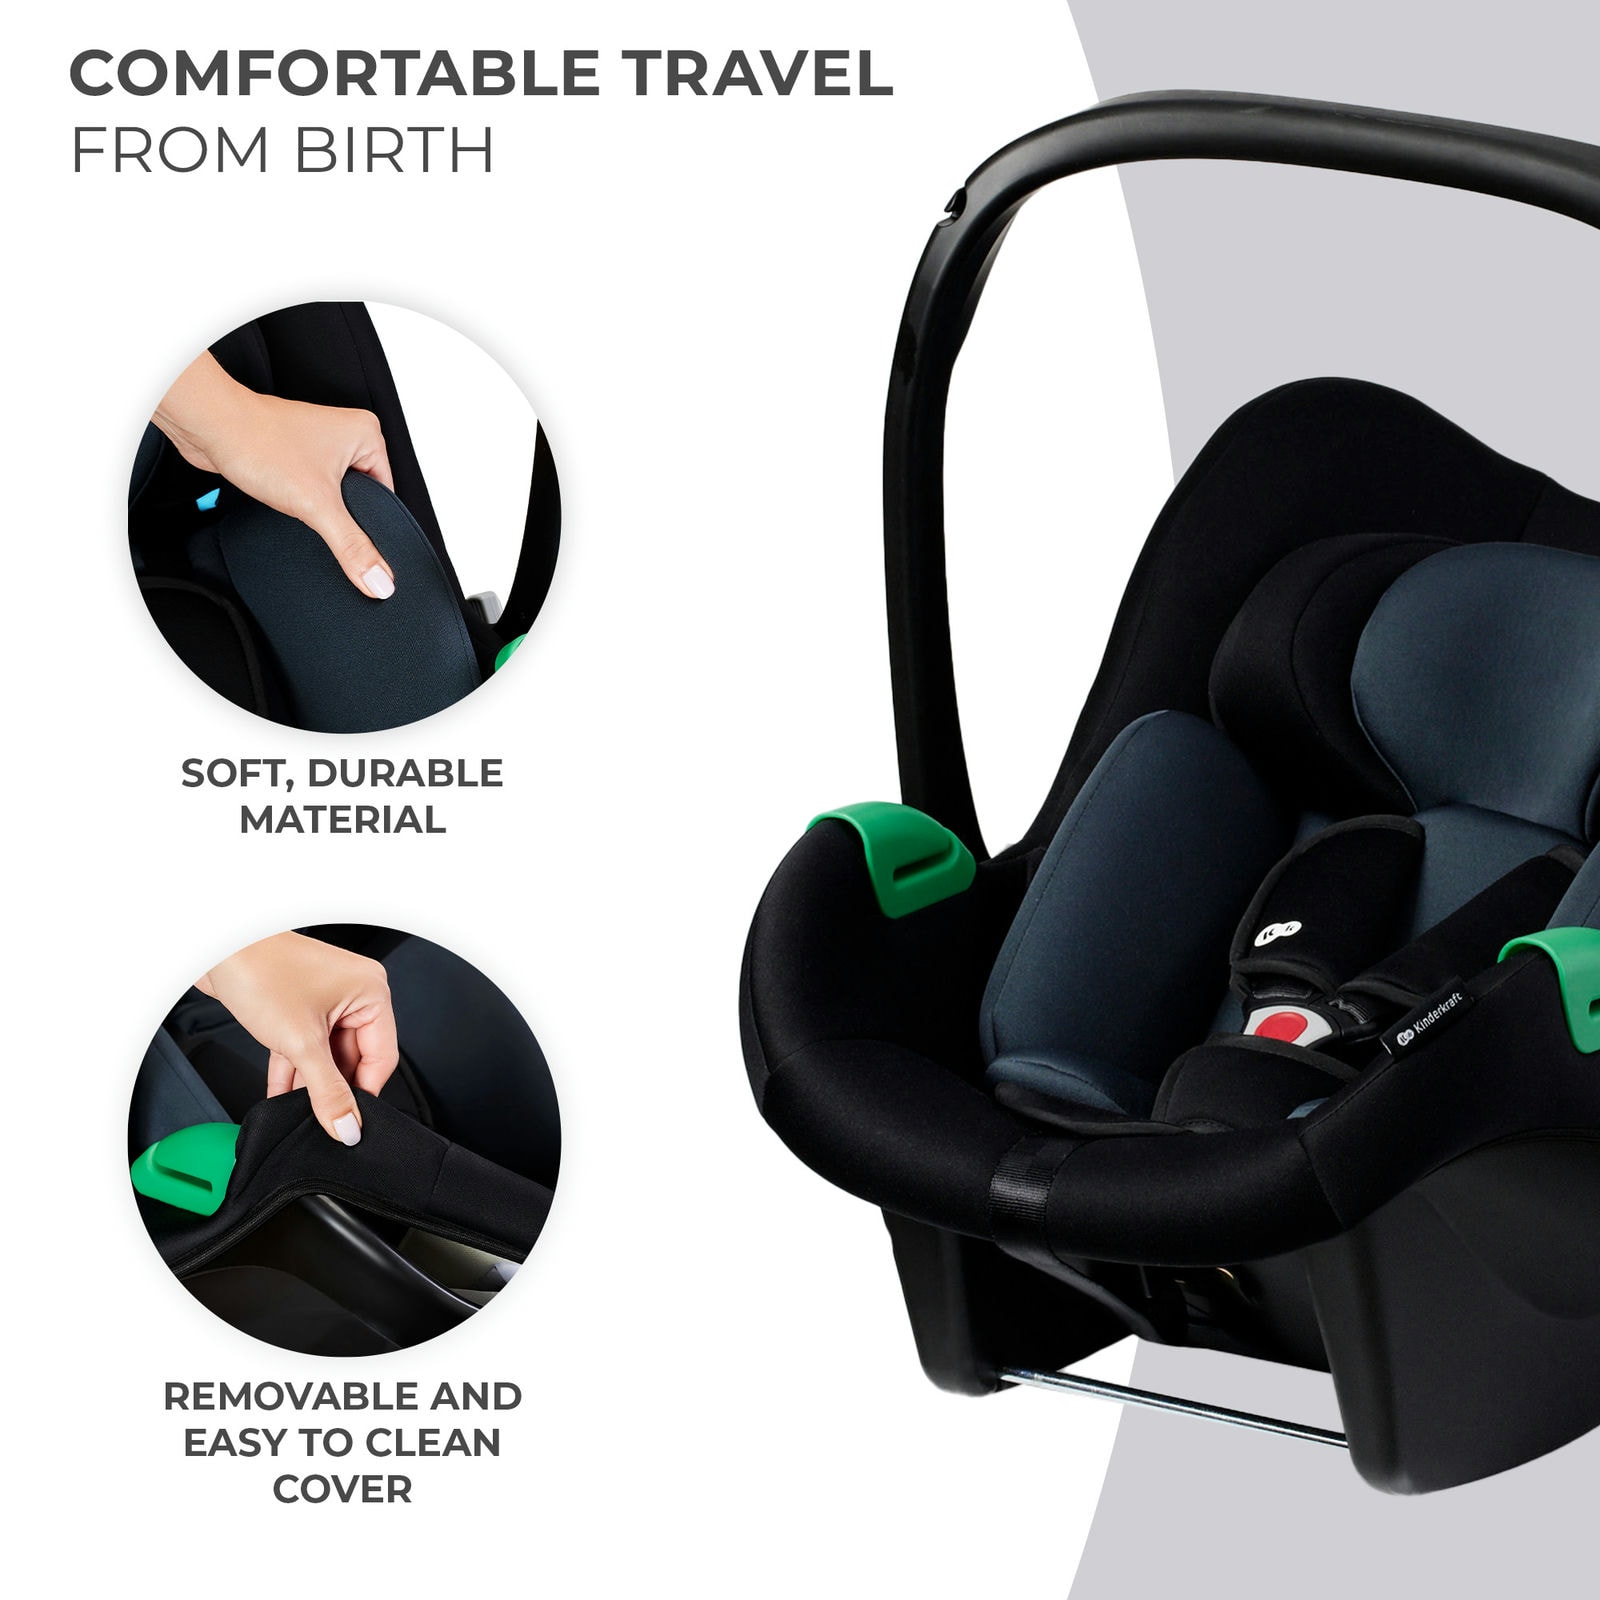 Car seat MINK PRO i-Size with MINK FX base black